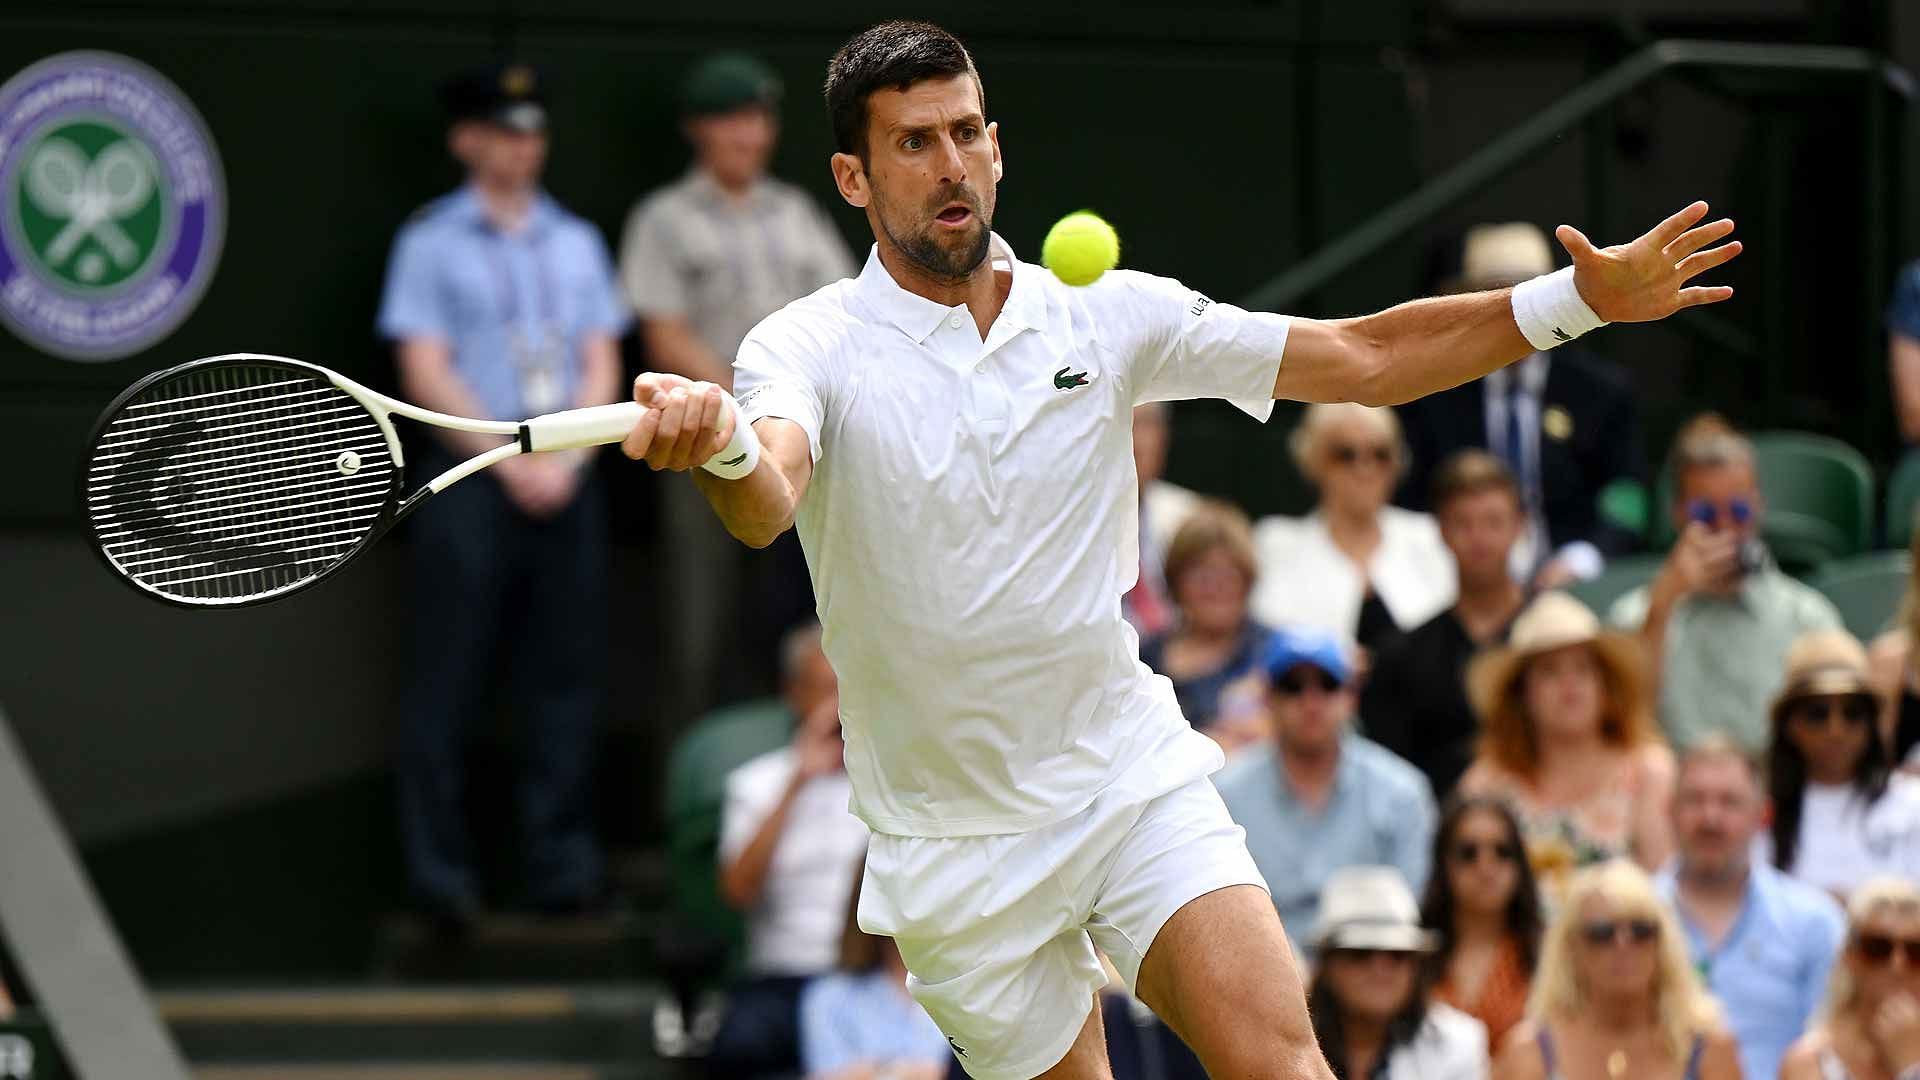 Djokovic reached yet another Wimbledon quarterfinal beating Hurkacz